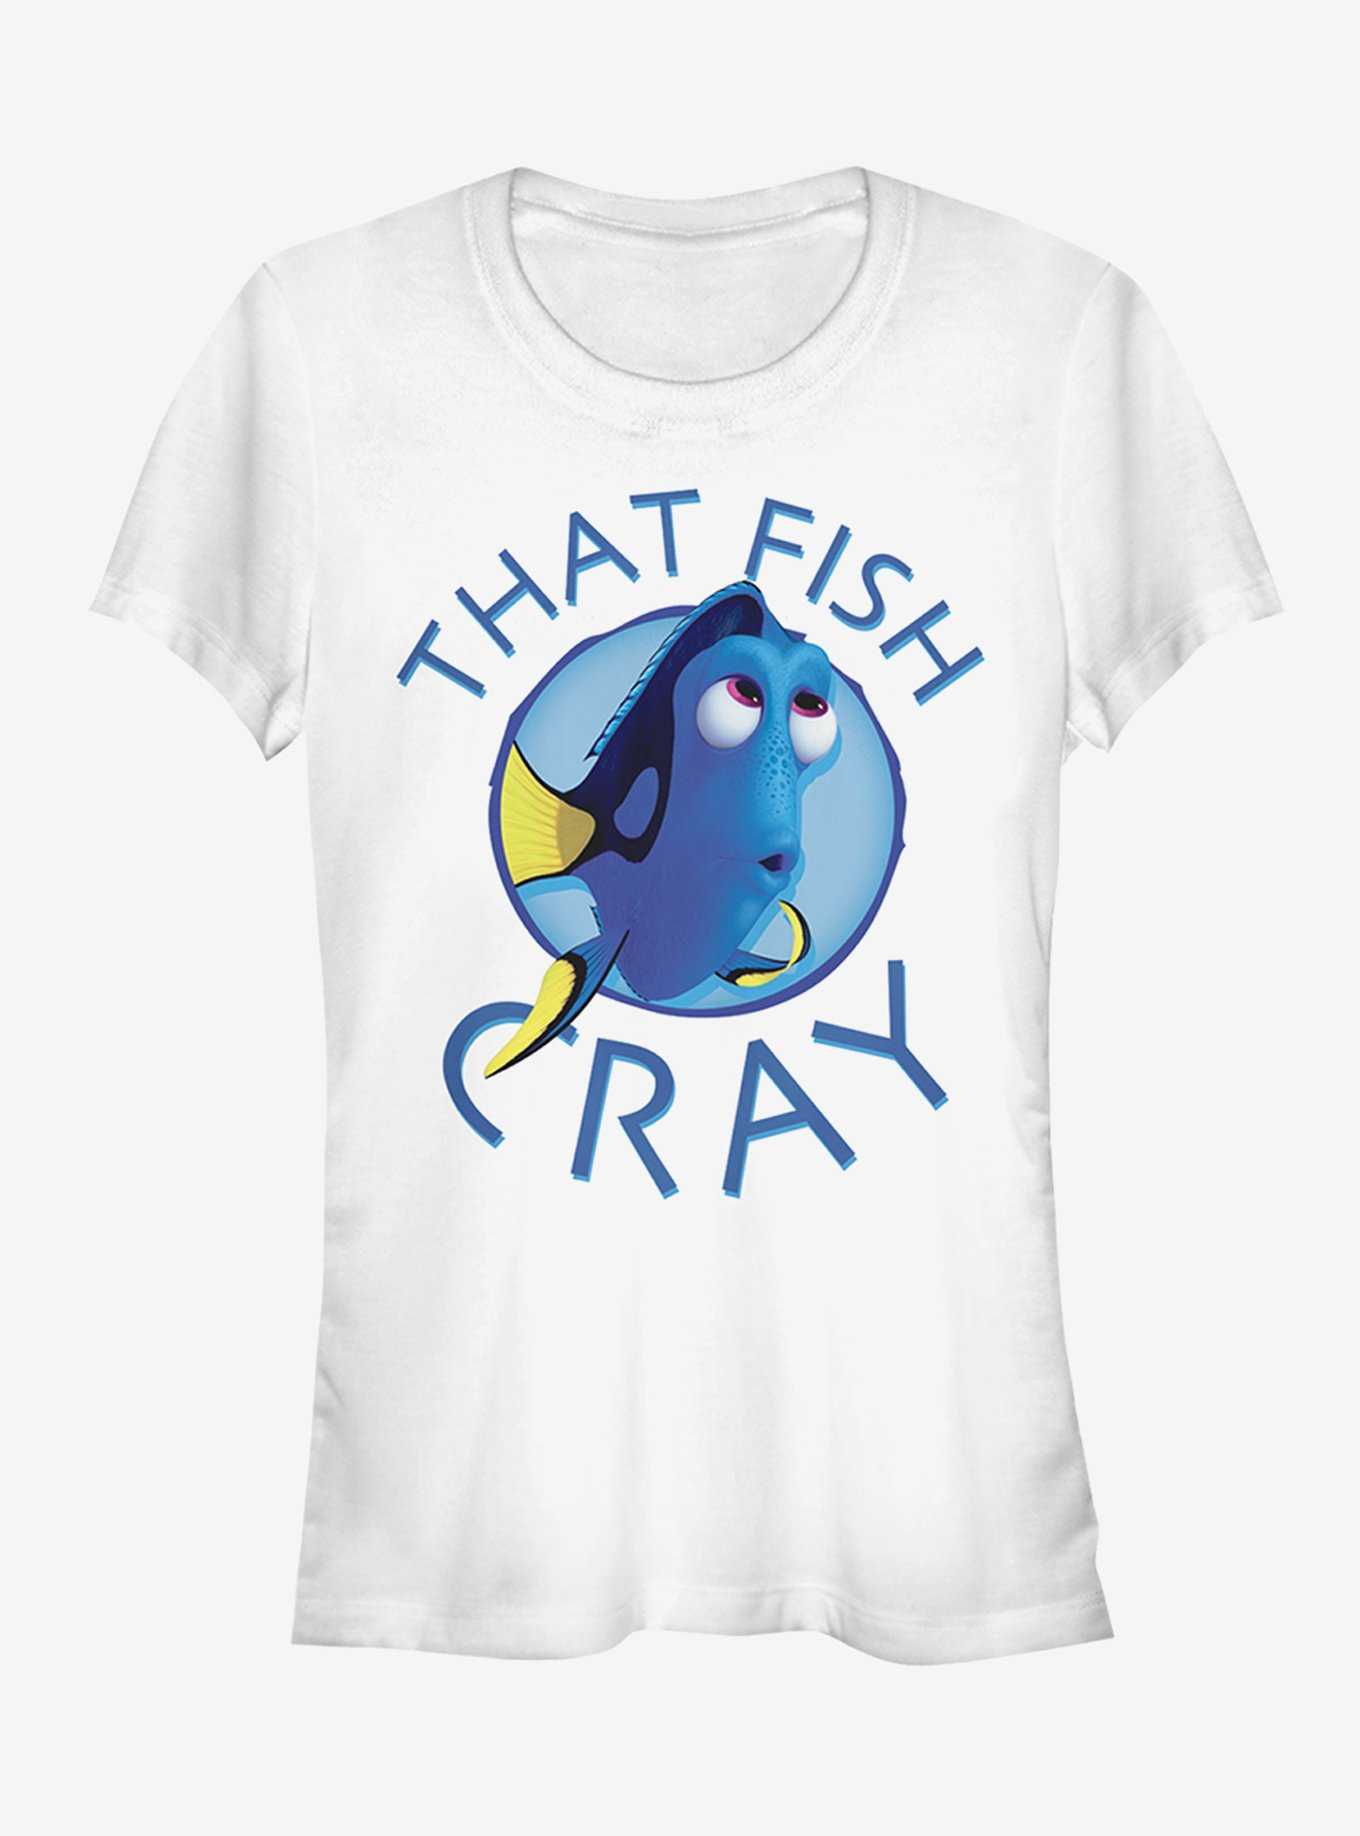 Disney Pixar Finding Nemo That Fish Cray Girls T-Shirt, , hi-res